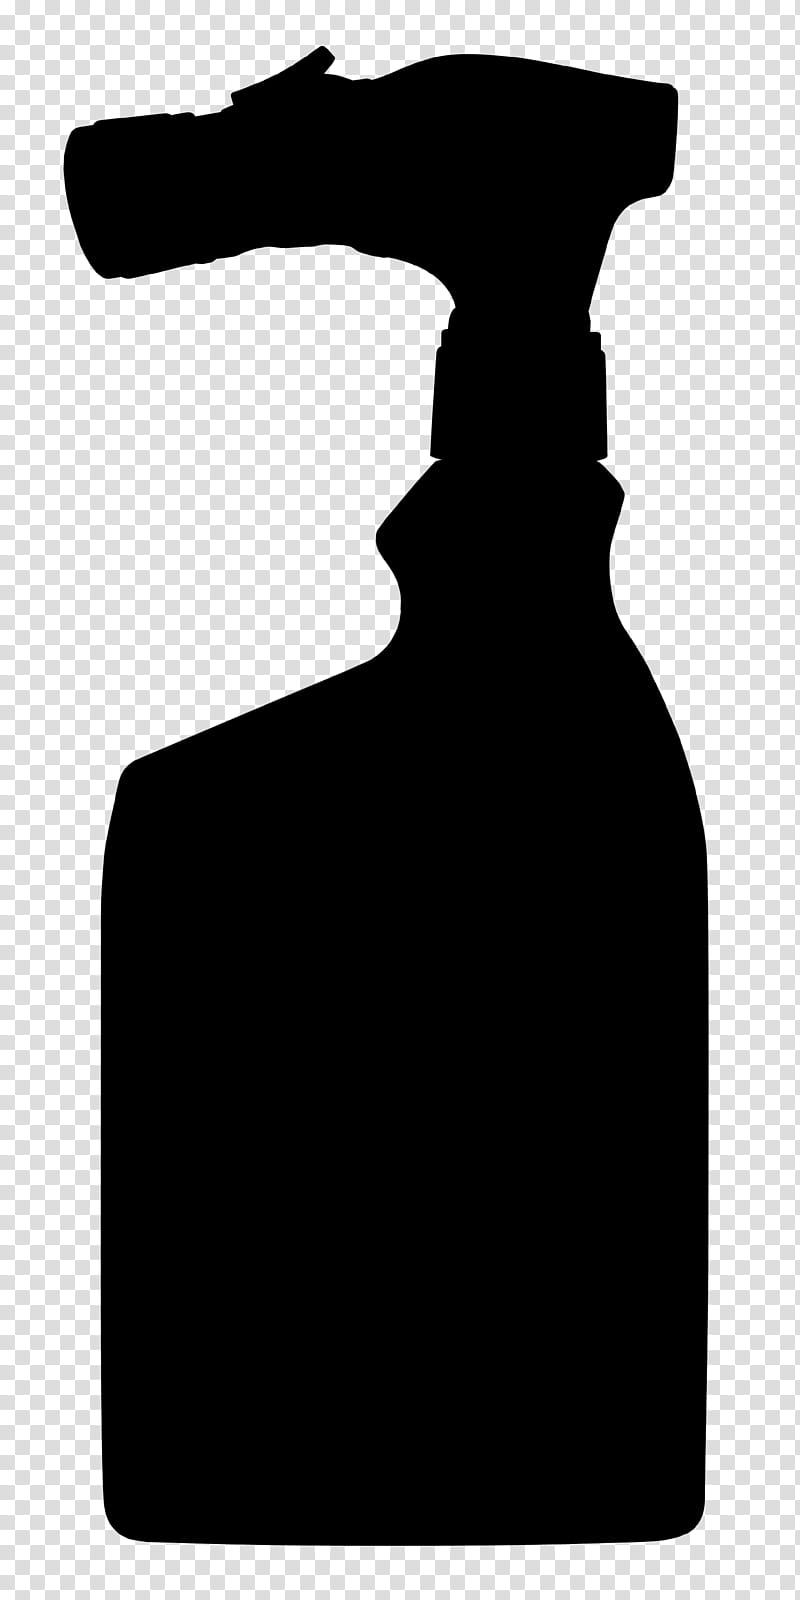 Plastic Bottle, Shoulder, Silhouette, Black, Blackandwhite, Neck, Water Bottle, Little Black Dress transparent background PNG clipart